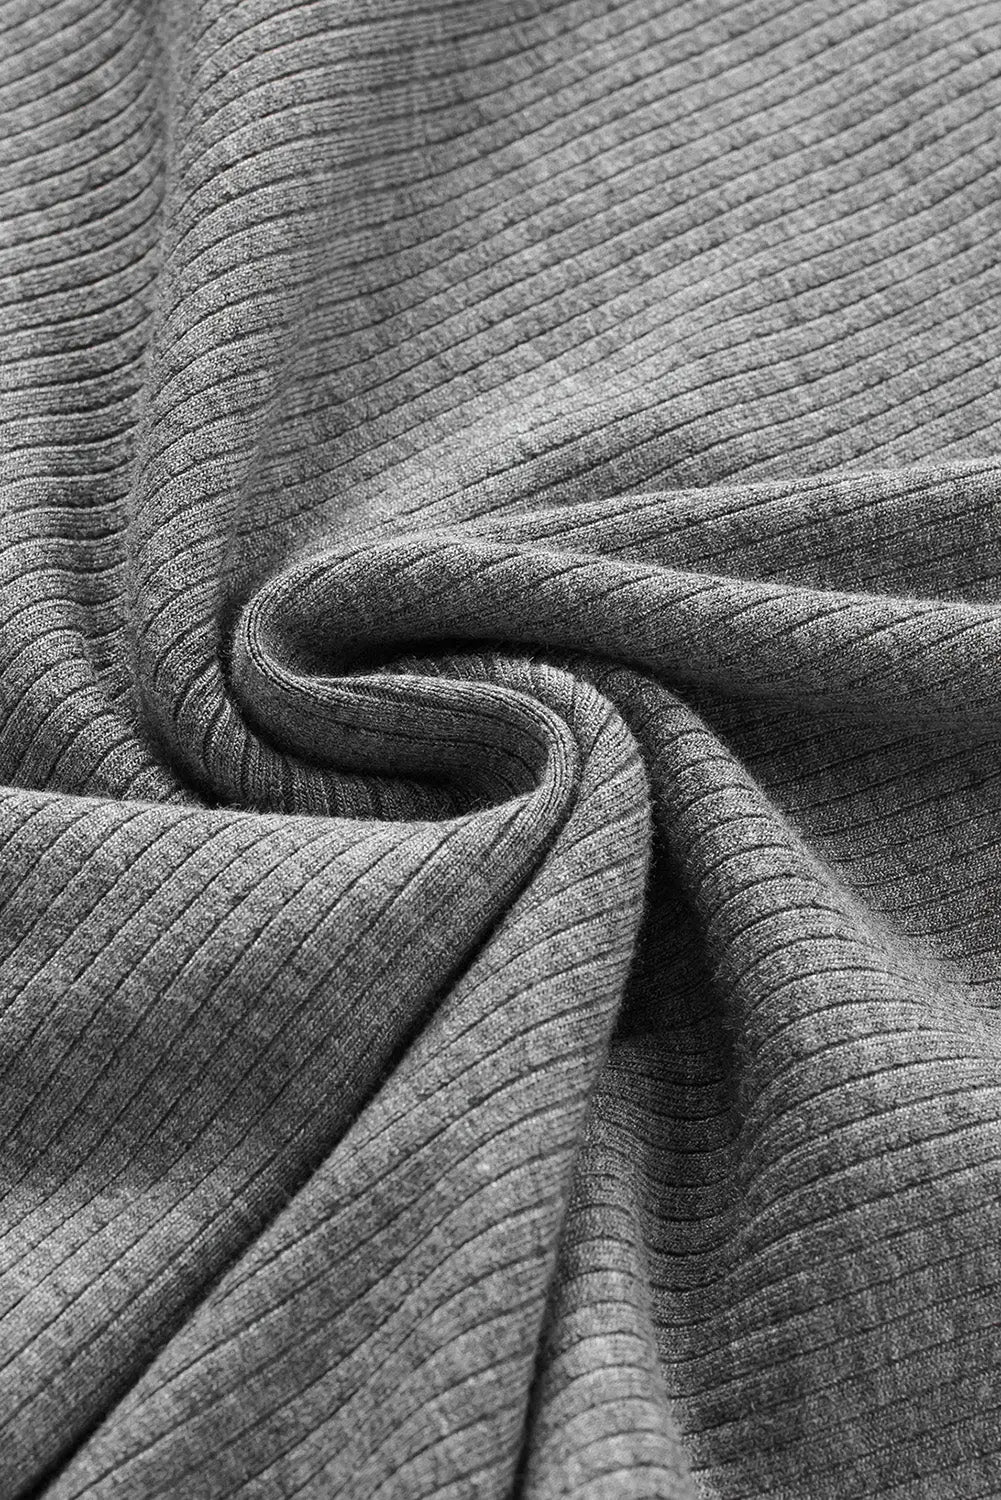 Dotty mesh ruffle sleeve ribbed knit top - tops/tops & tees